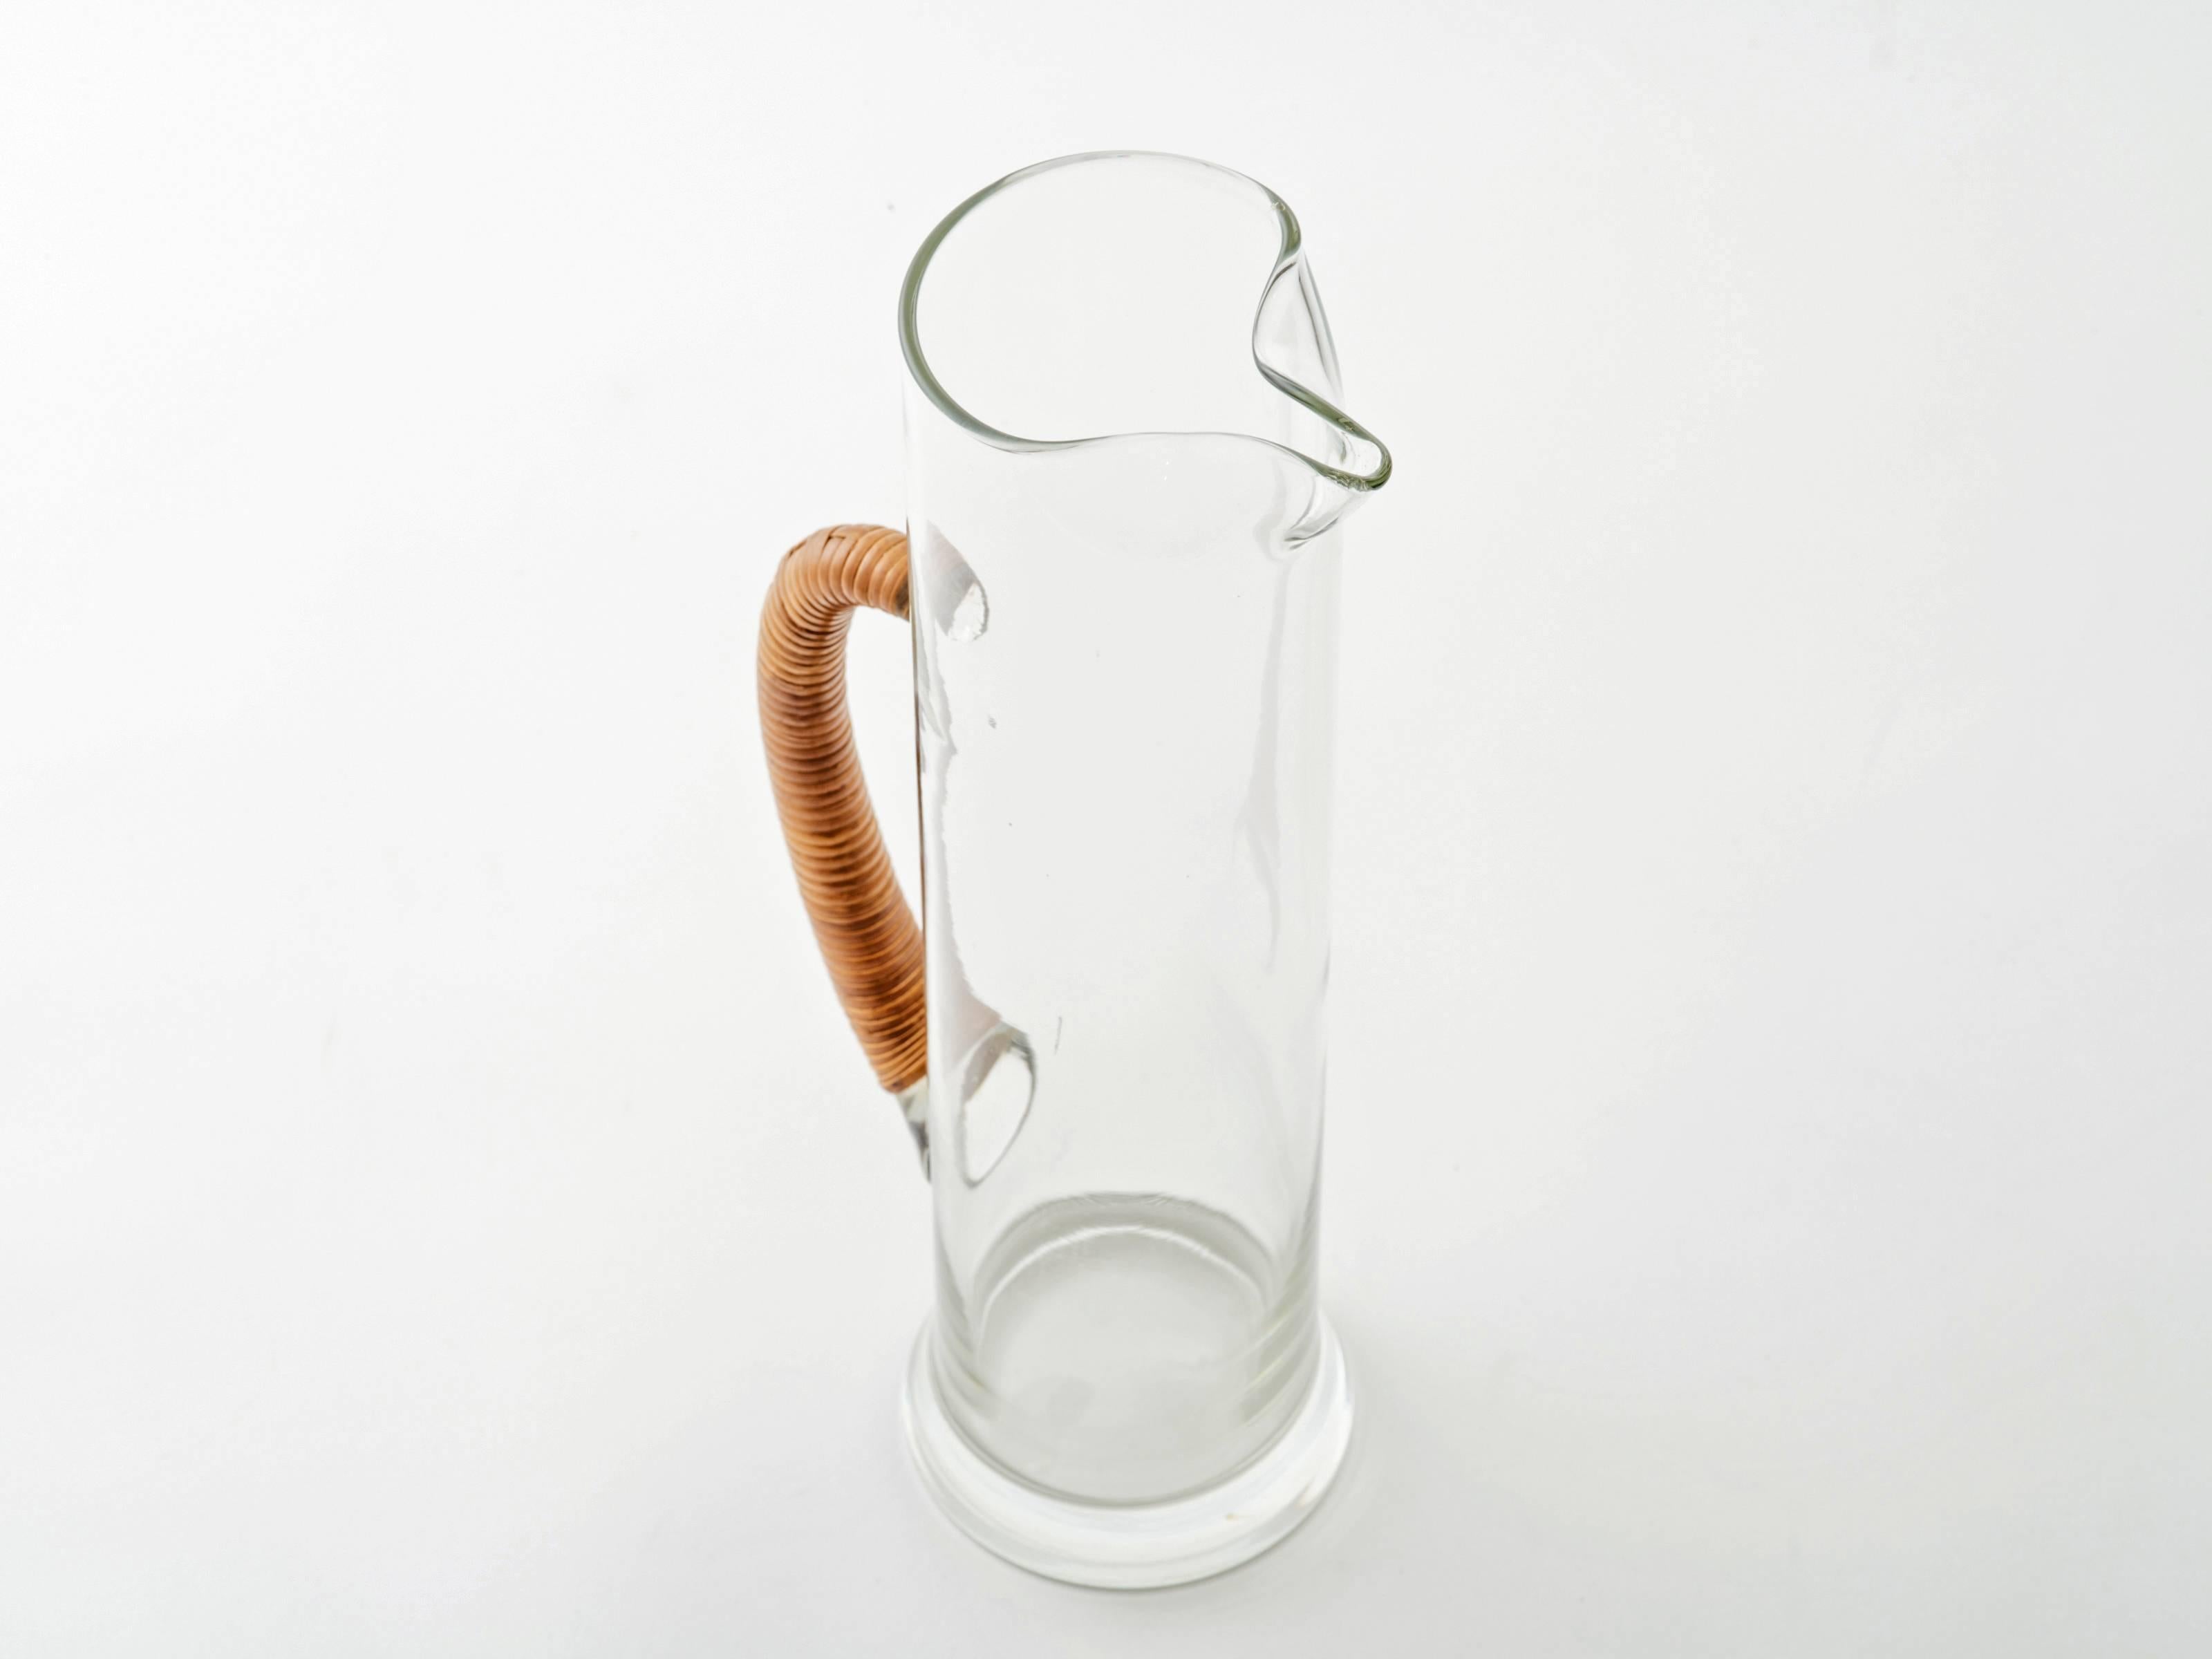 tall slender glass or an instrument